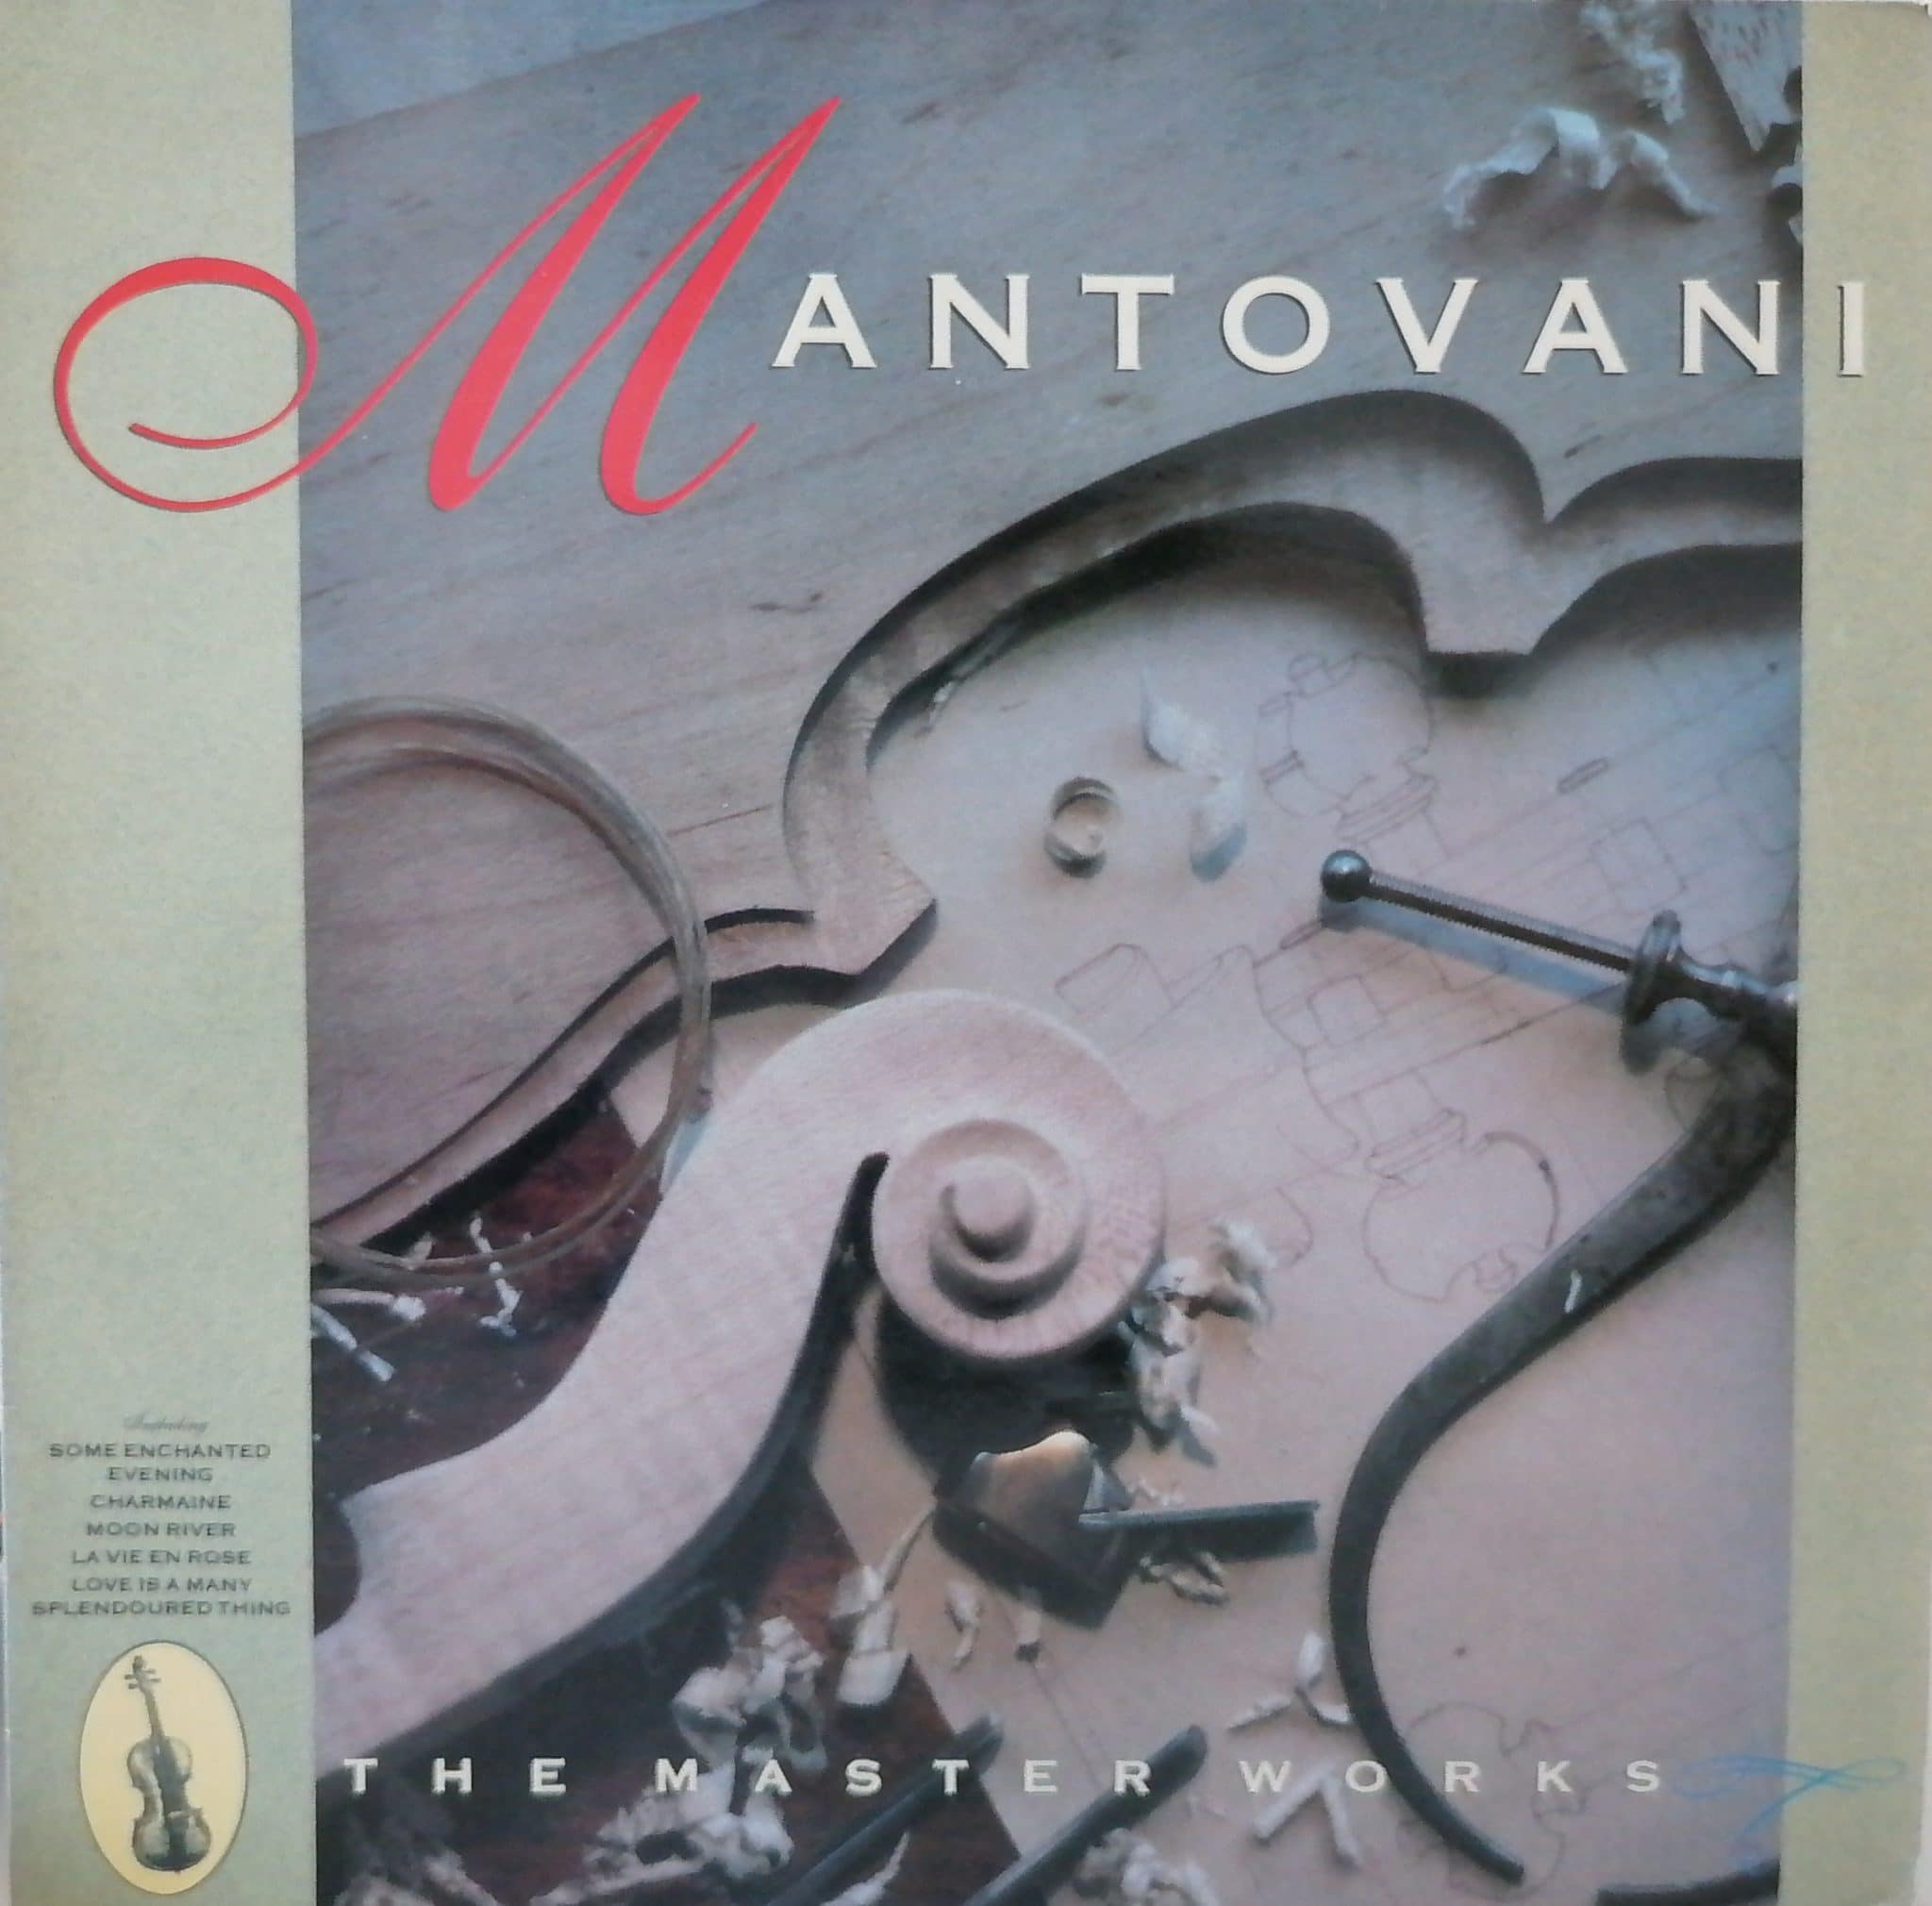 Gramofonska ploča Annunzio Paolo Mantovani The Master Works STAR 2335